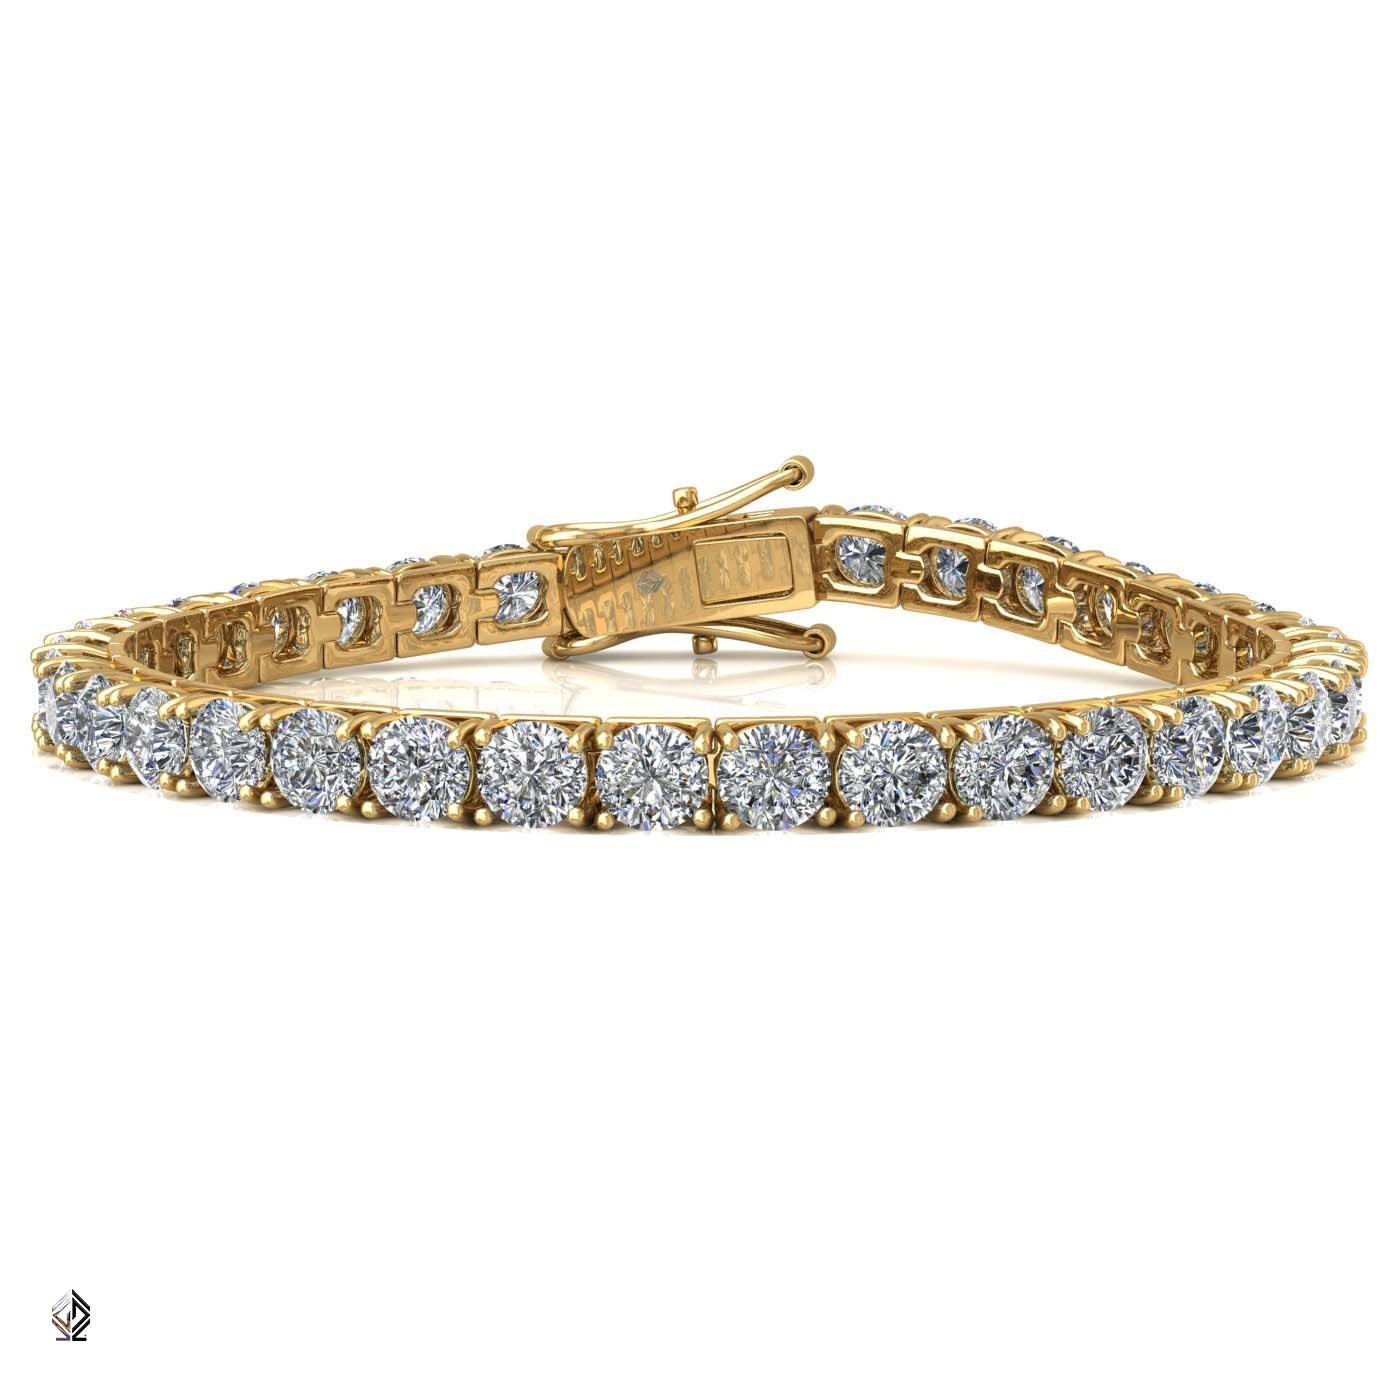 18k yellow gold 4.2mm 4 prong round shape diamond tennis bracelet in square setting